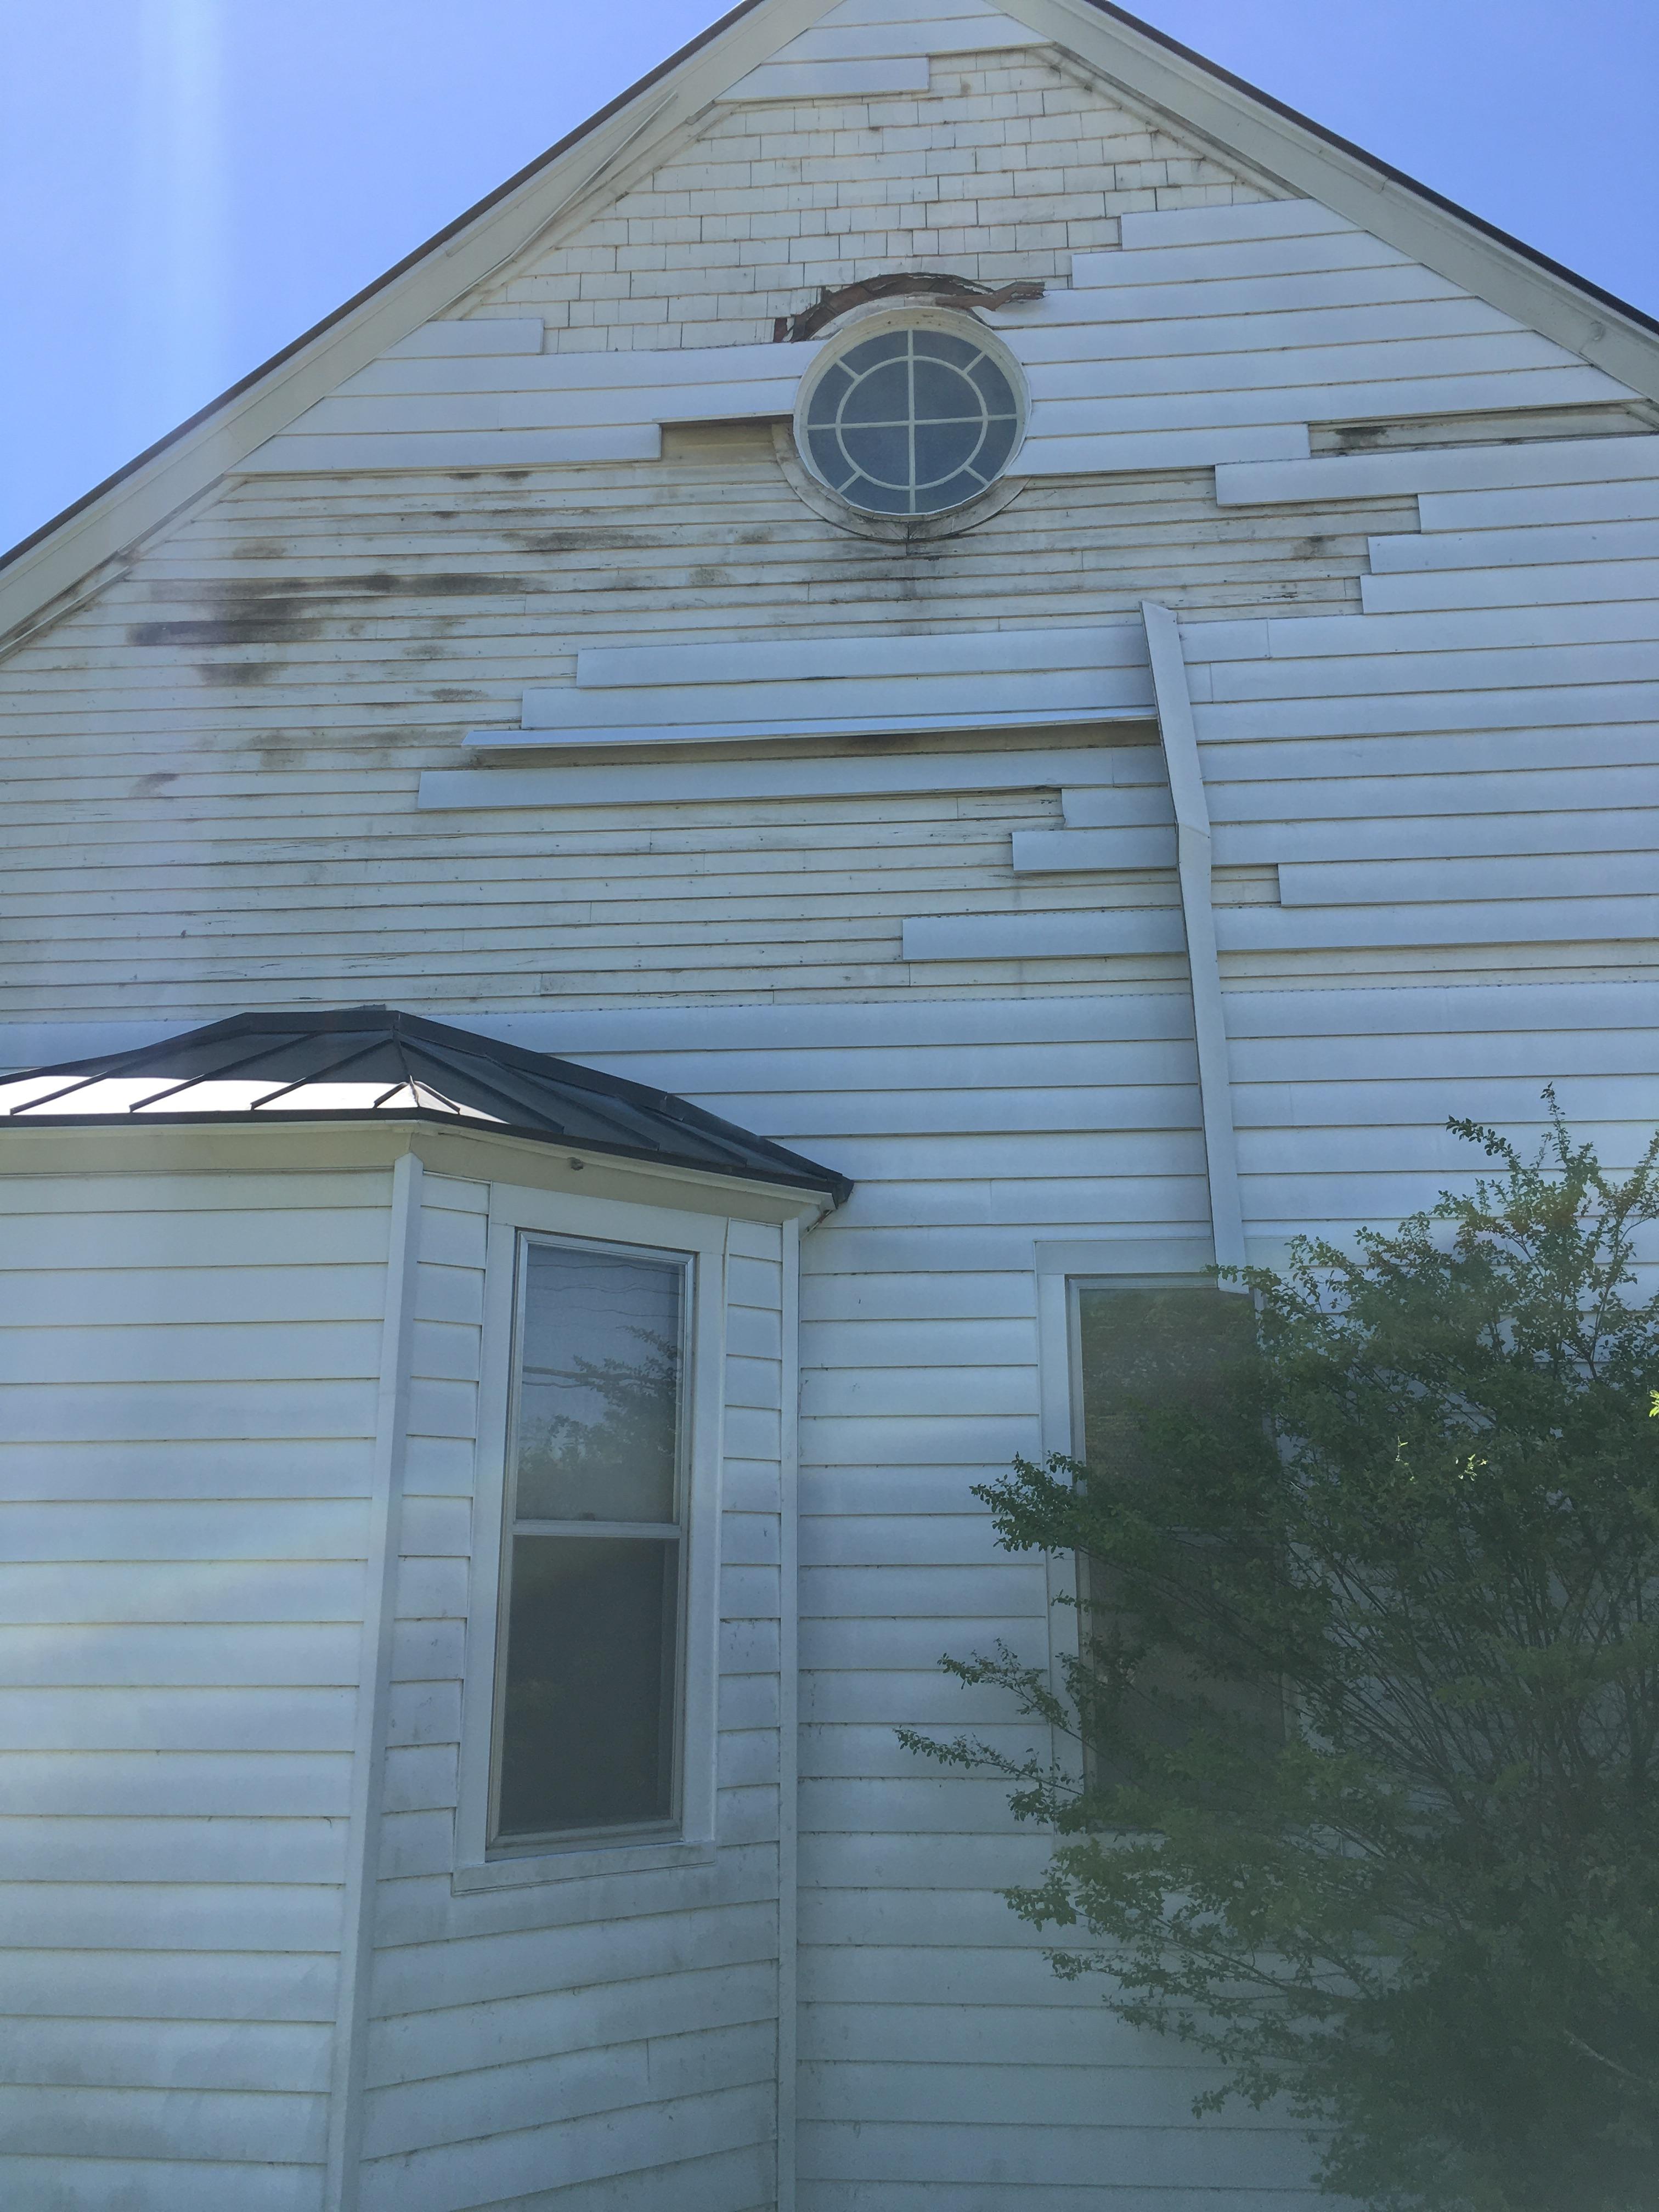 Damage to siding of church in Fairfield, VA